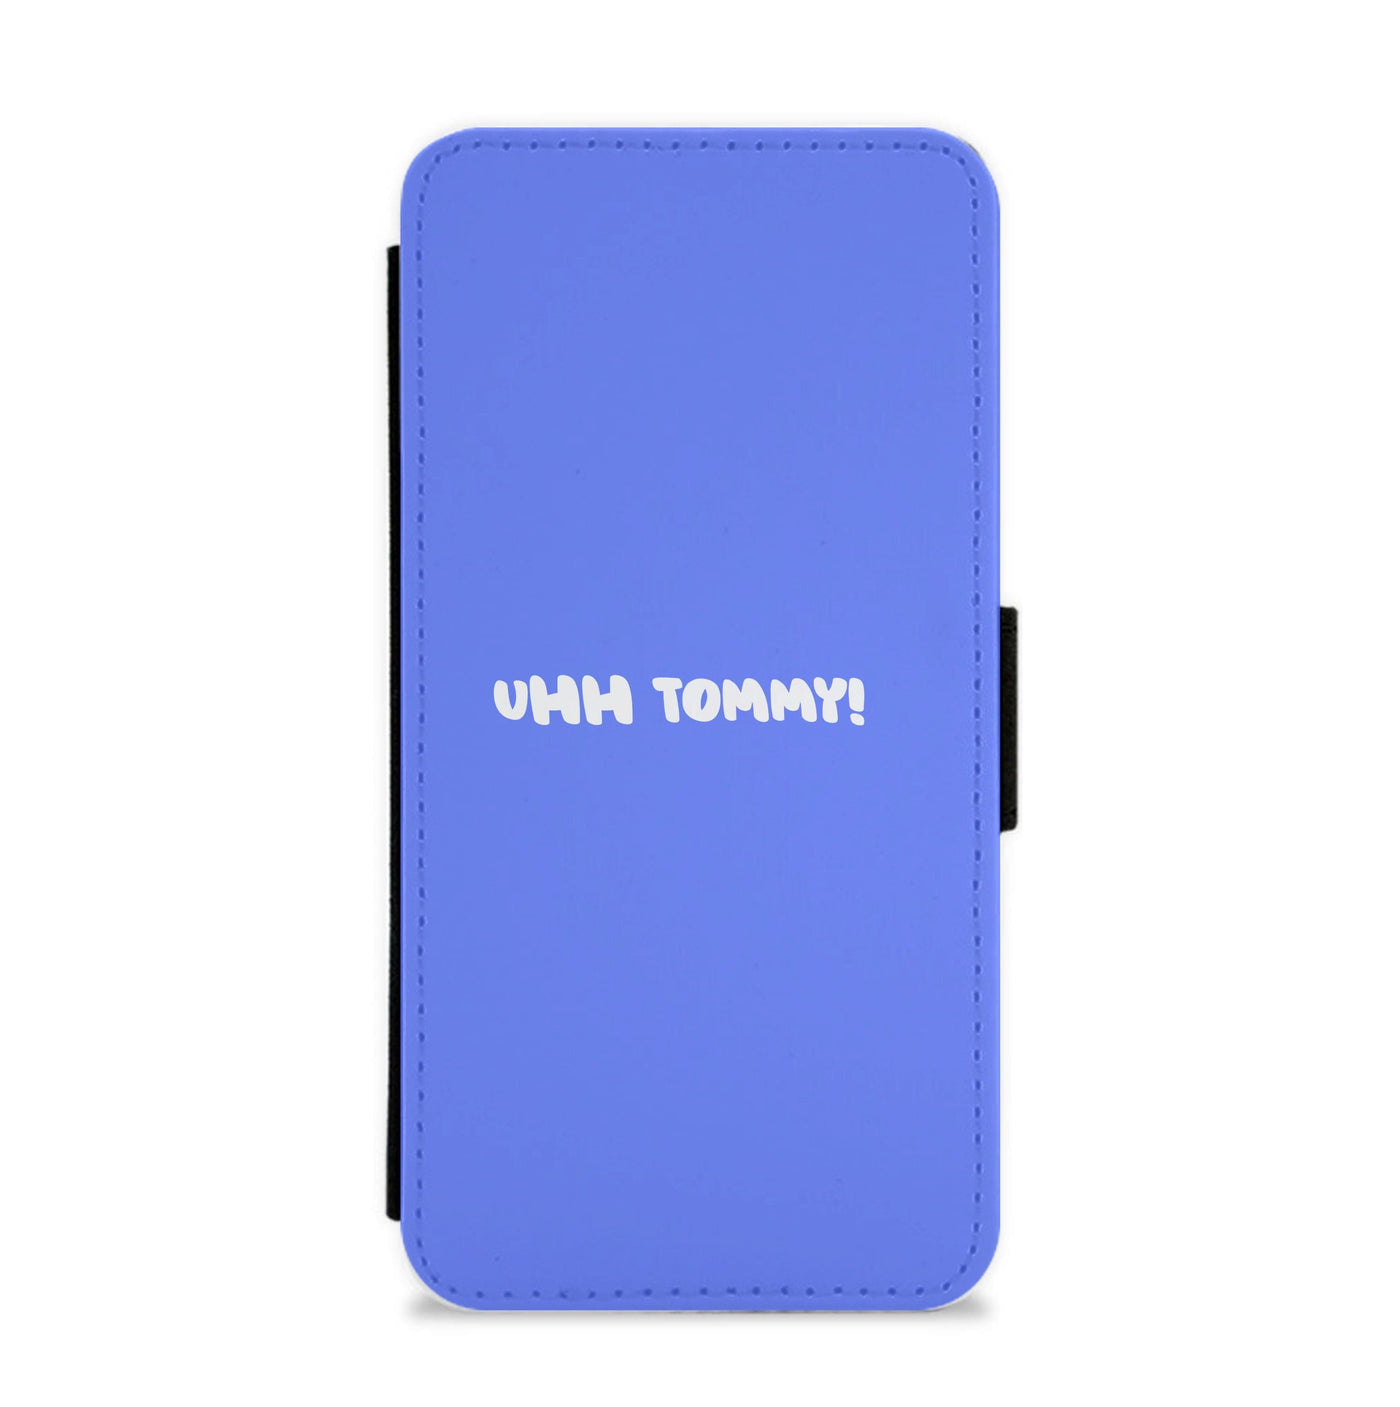 Uhh Tommy! - Islanders Flip / Wallet Phone Case